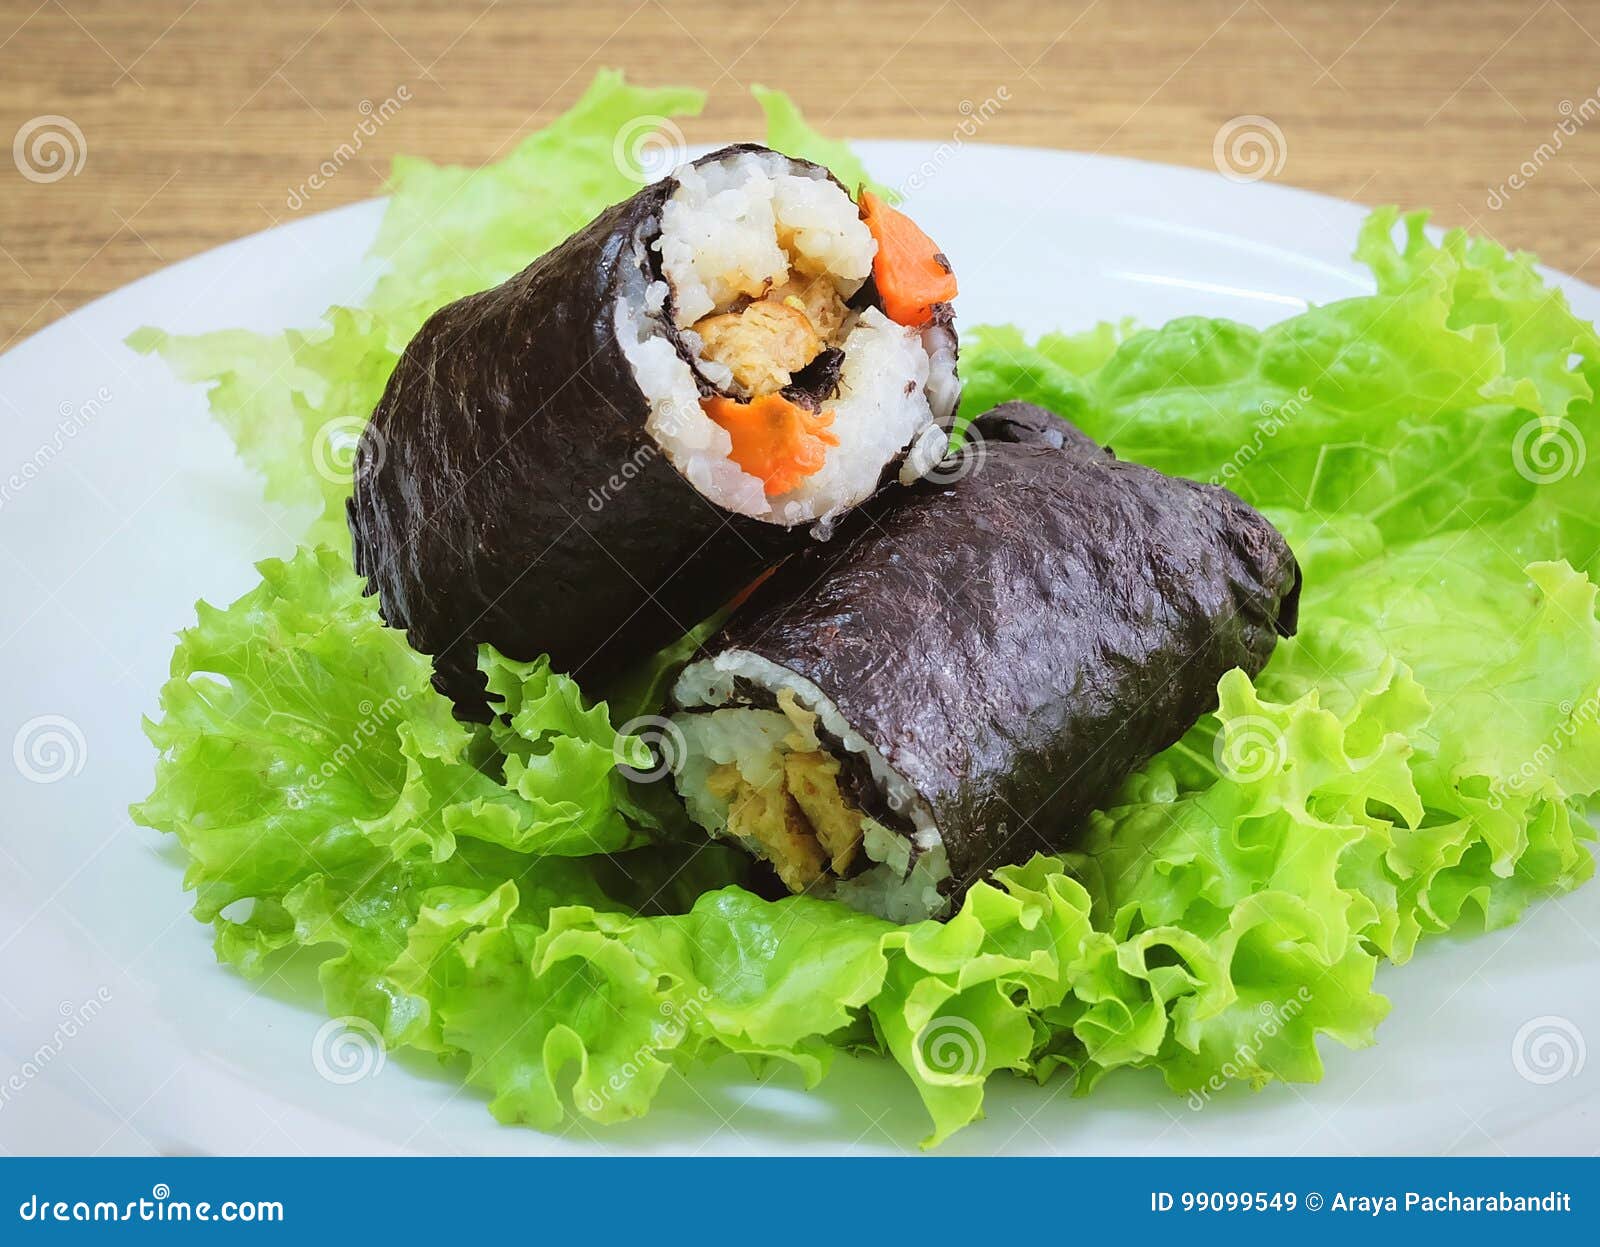 https://thumbs.dreamstime.com/z/japanese-rice-maki-sushi-roll-stuff-tofu-carrot-cuisine-traditional-vagetarian-wrapped-nori-seaweed-served-green-99099549.jpg